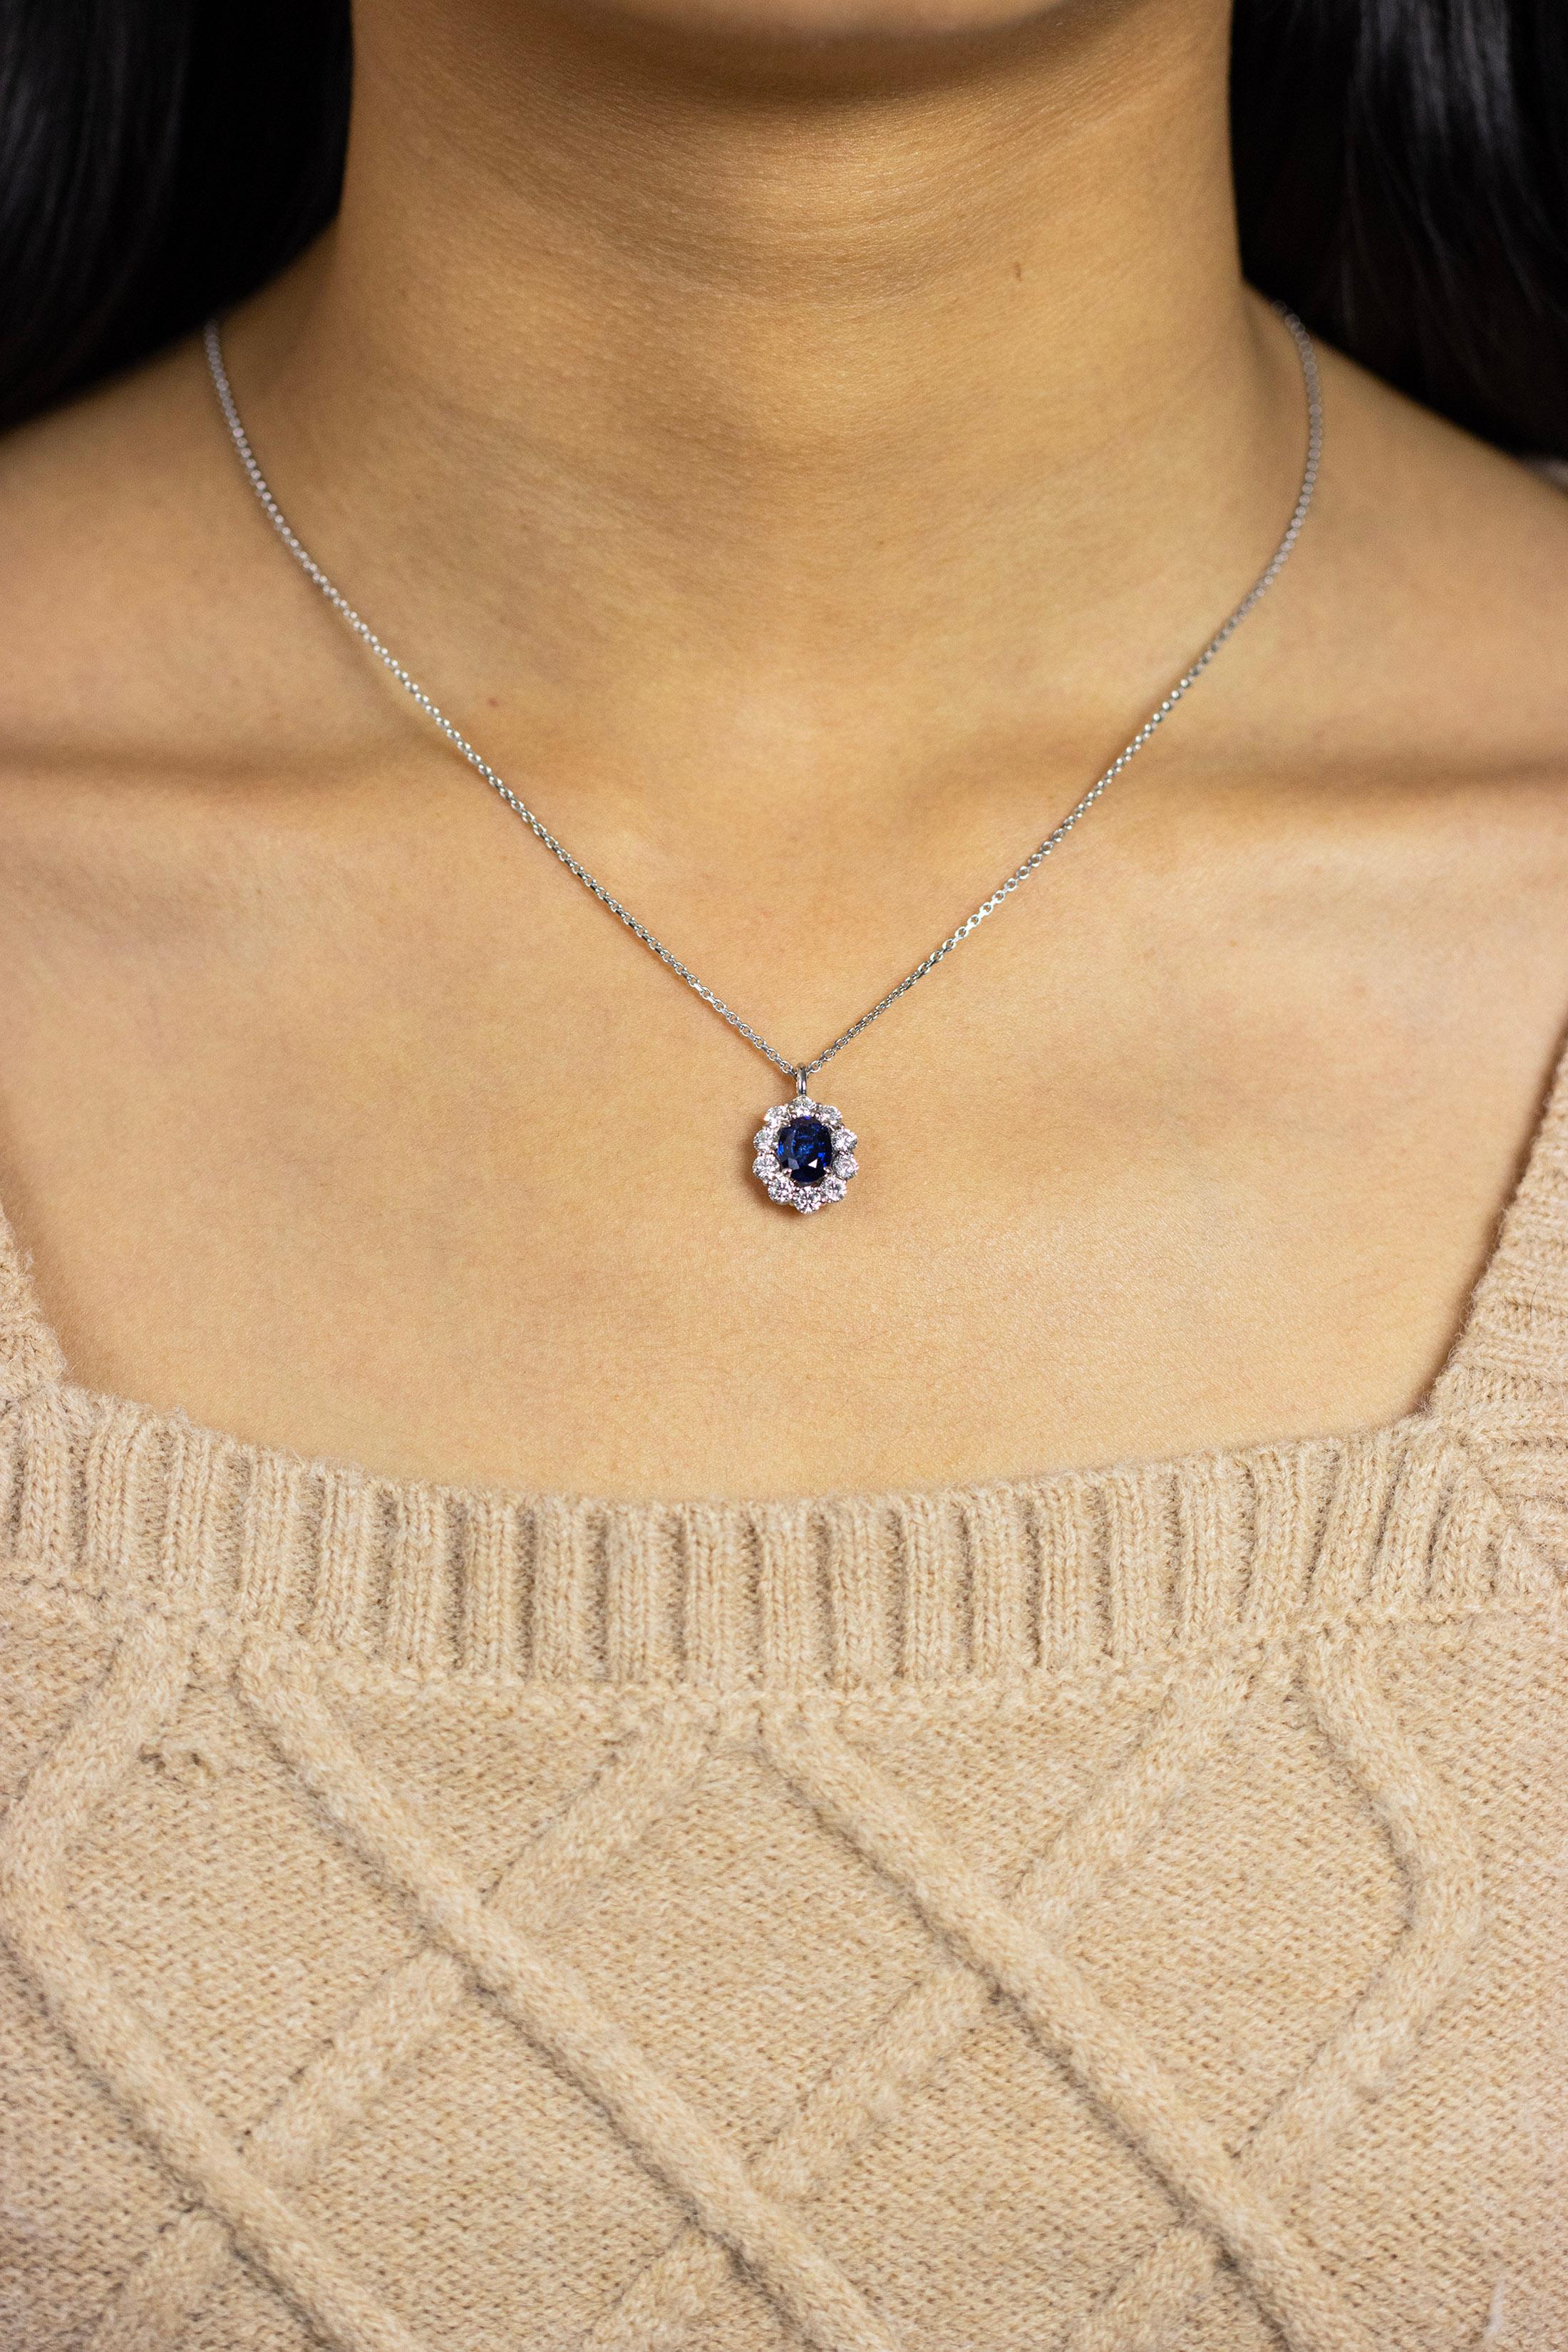 Contemporary Roman Malakov 1.82 Carat Oval Blue Sapphire with Diamond Halo Pendant Necklace For Sale